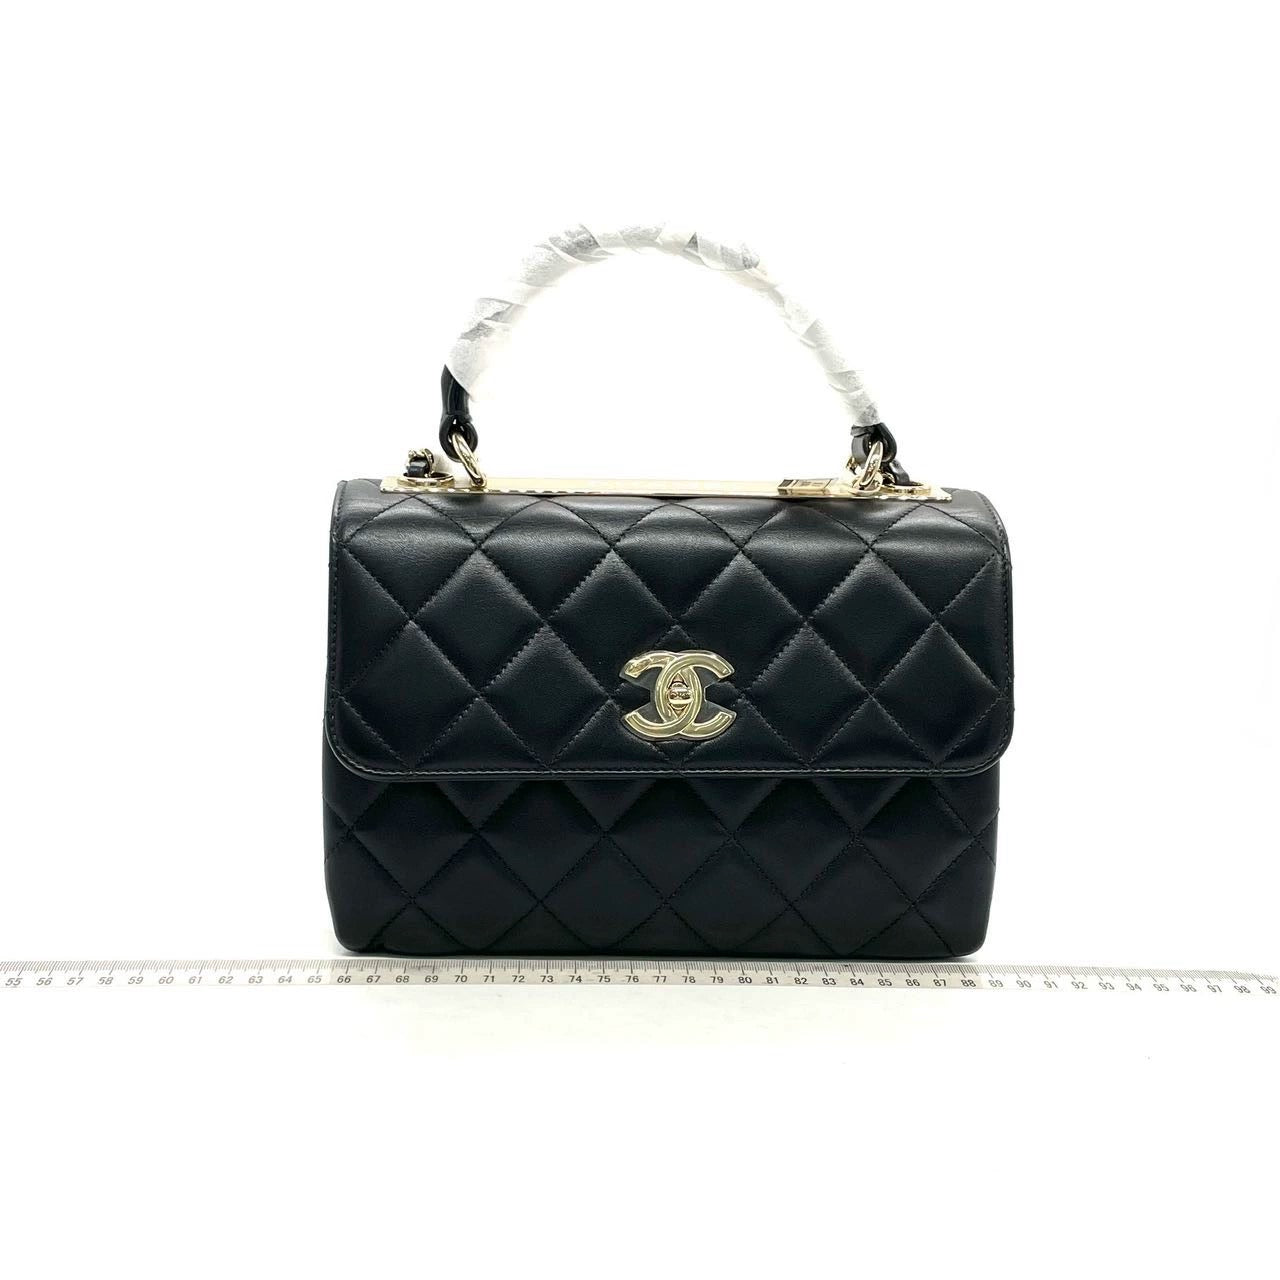 Sold Chanel Trendy CC Small black